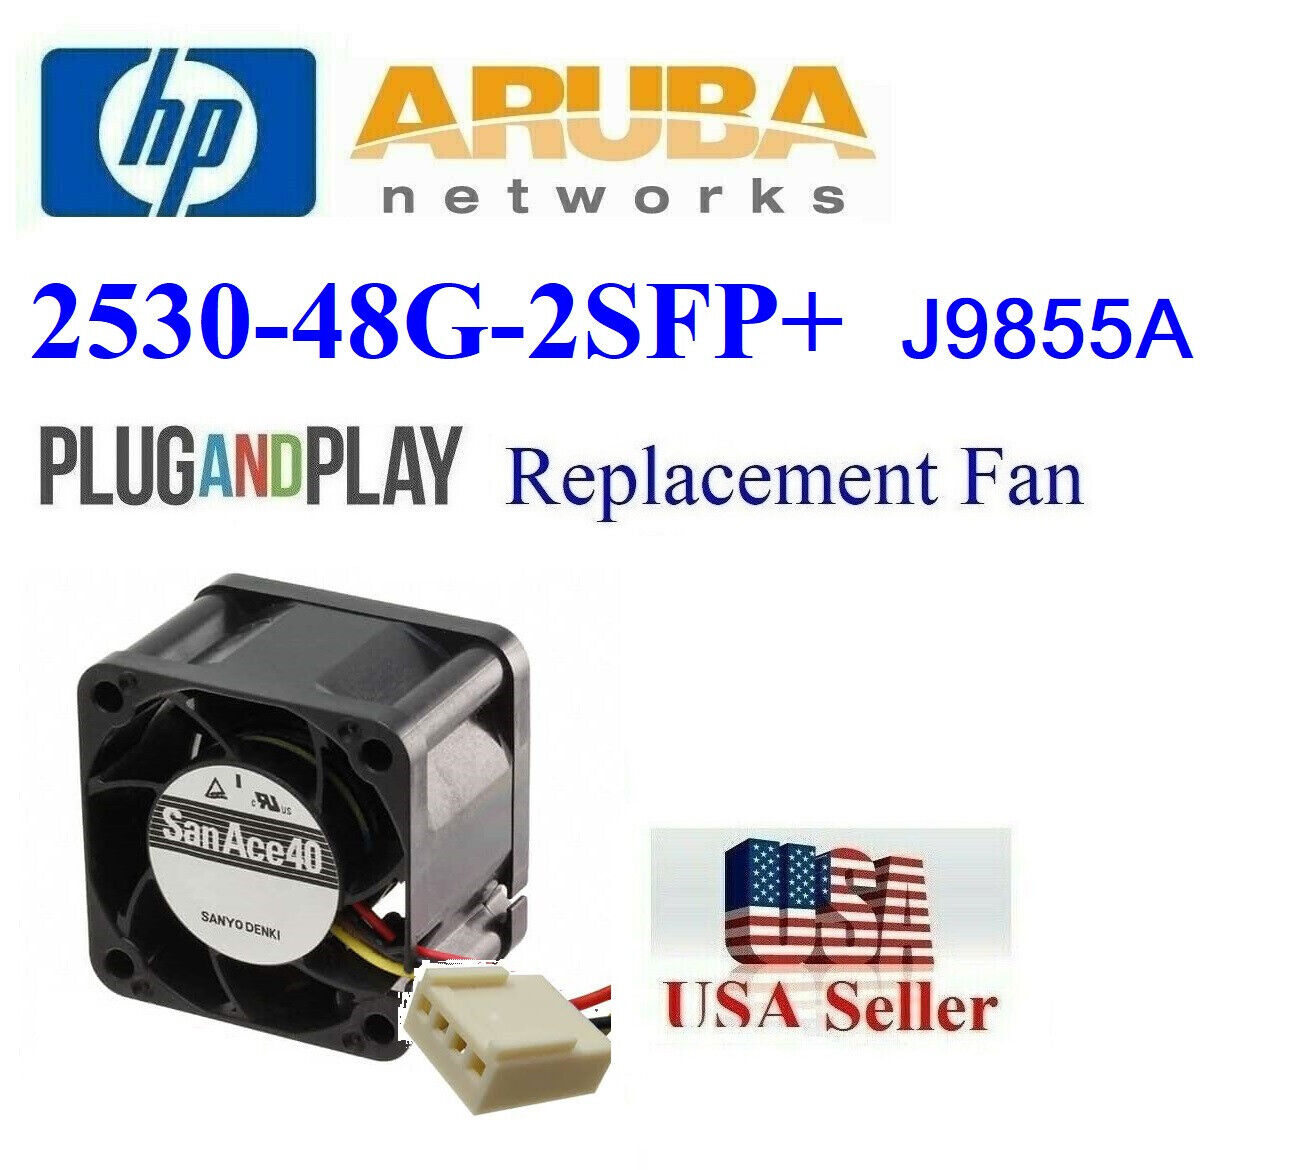 1x **QUIET** Replacement Fan for Aruba HP 2530-48G-2SFP+  (J9855A)